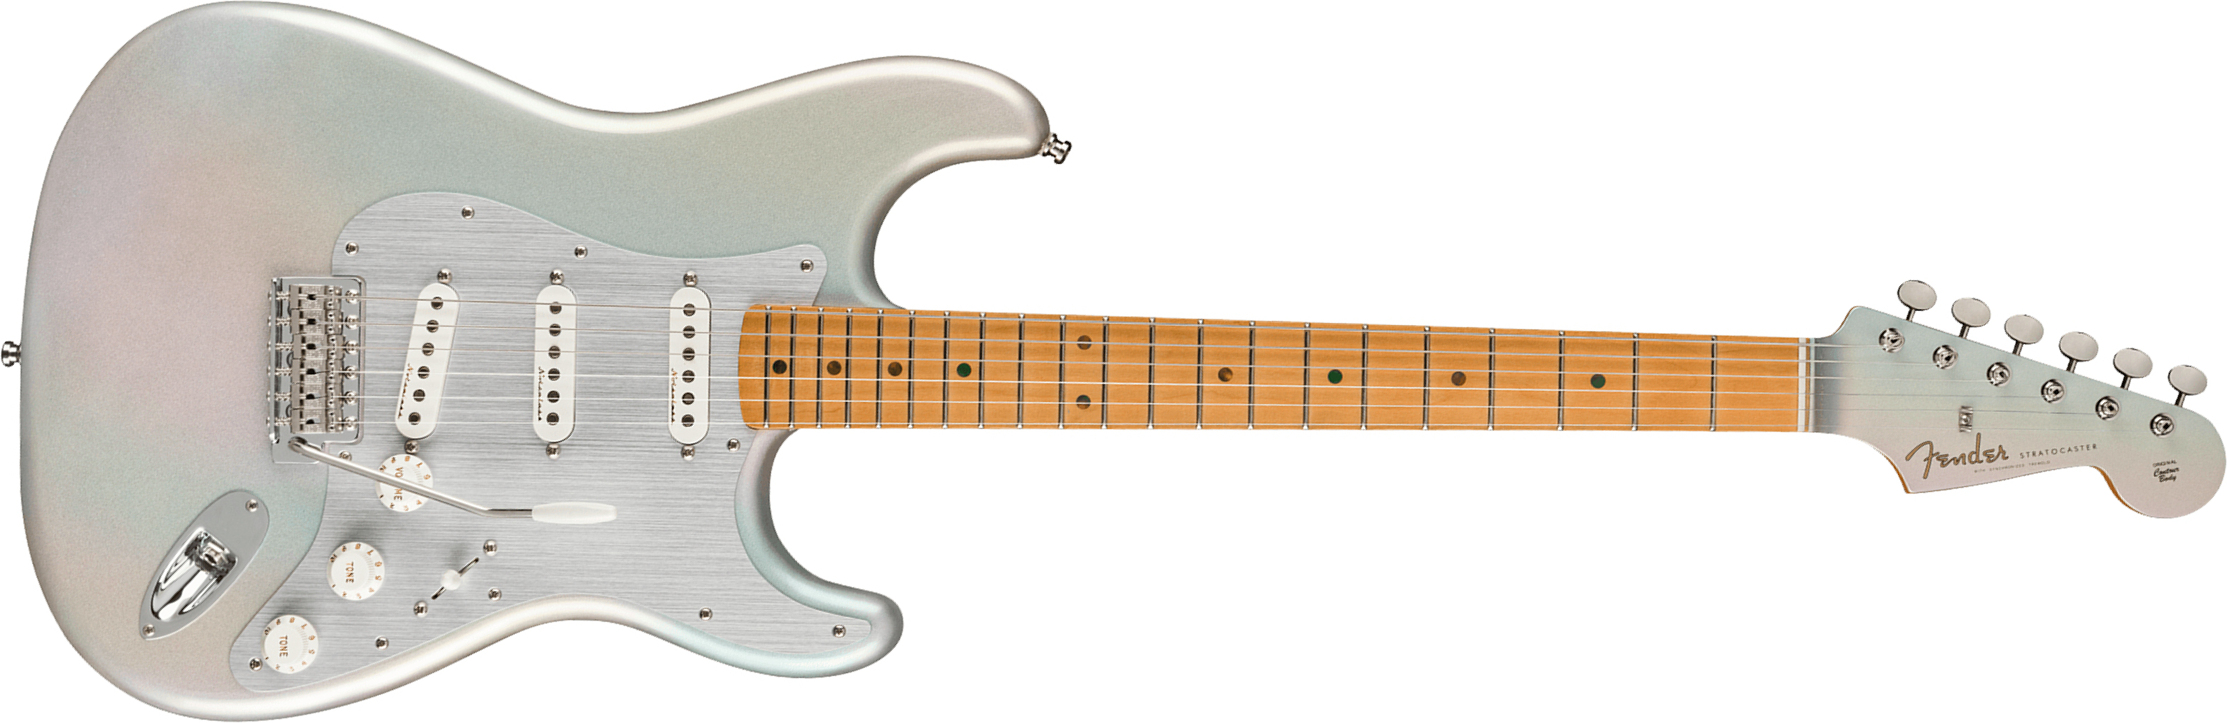 Fender H.e.r. Strat Signature Mex 3s Trem Mn - Chrome Glow - Str shape electric guitar - Main picture